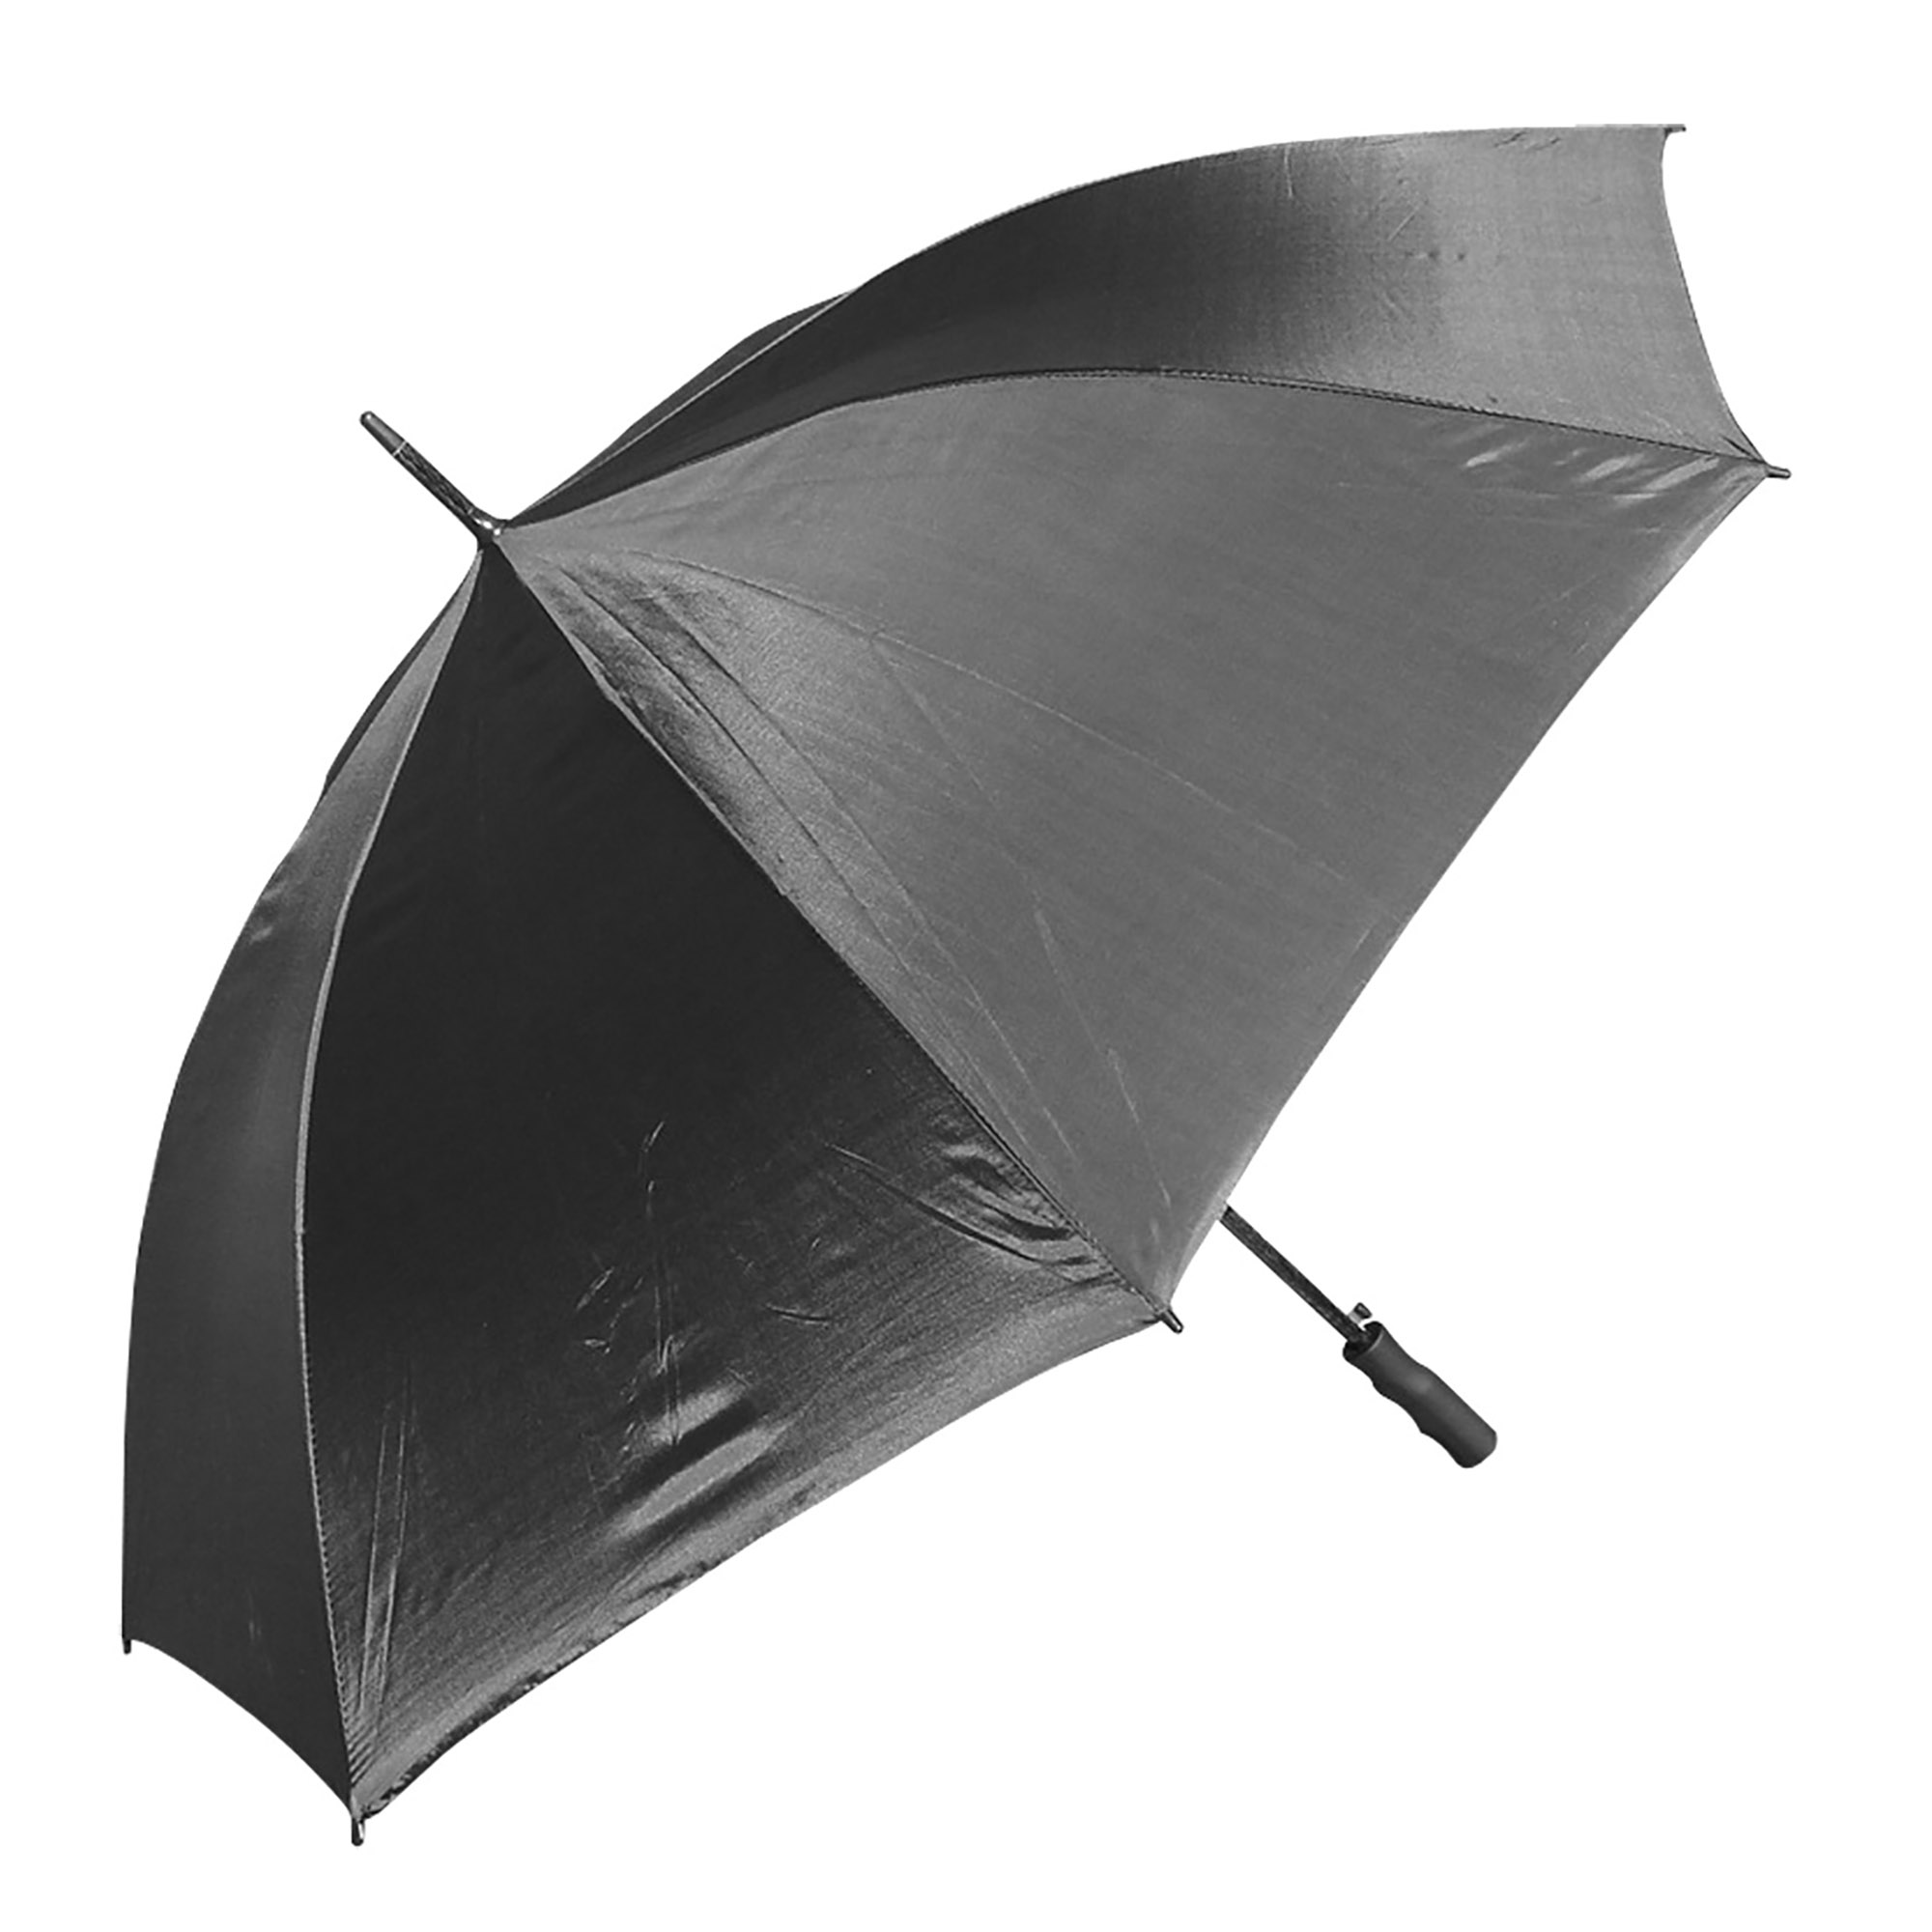 Bulk Promotional Black Sands Umbrella Online In Perth Australia